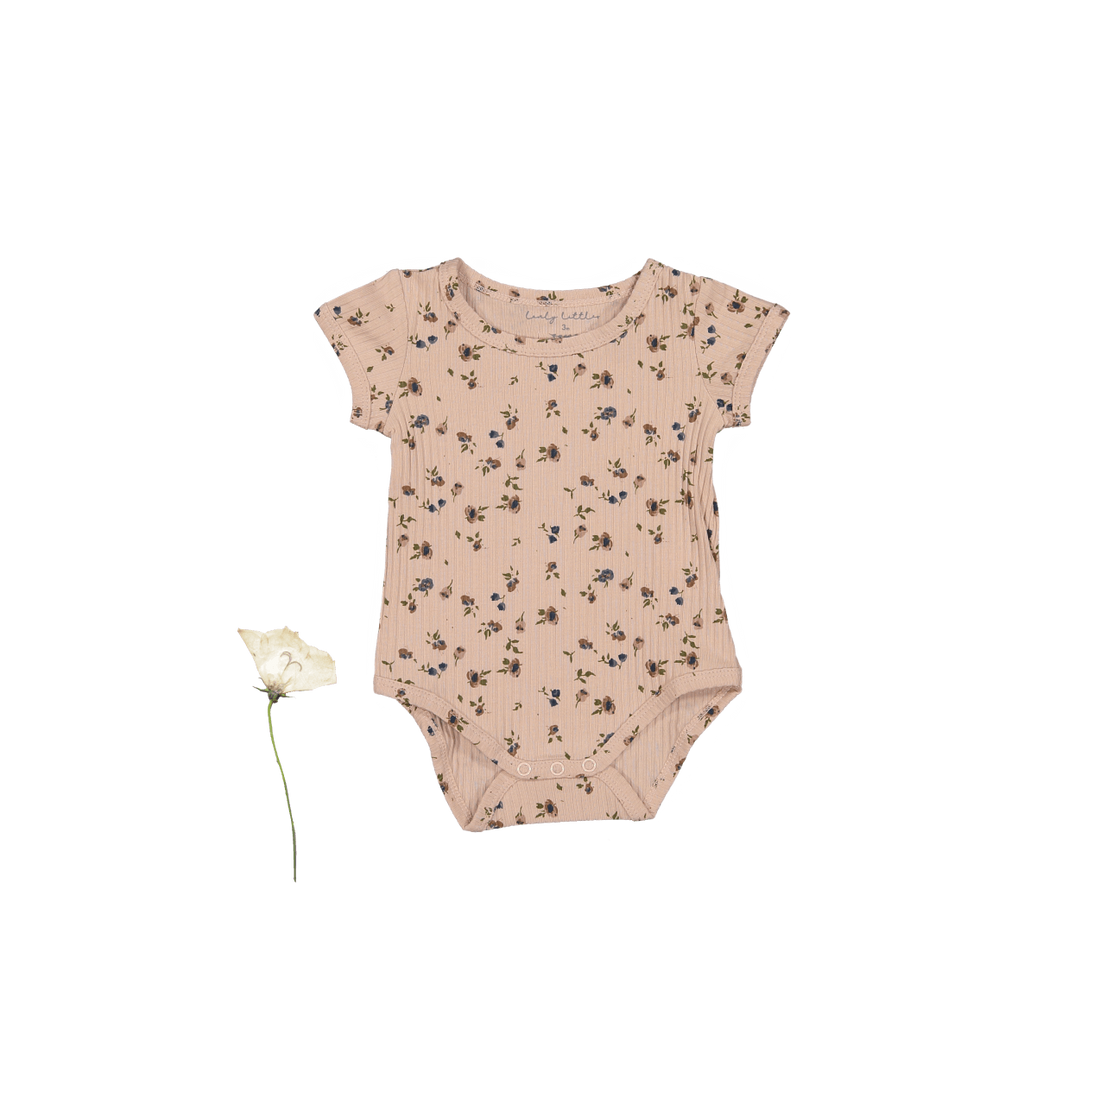 The Printed Short Sleeve Onesies - Floral Blush